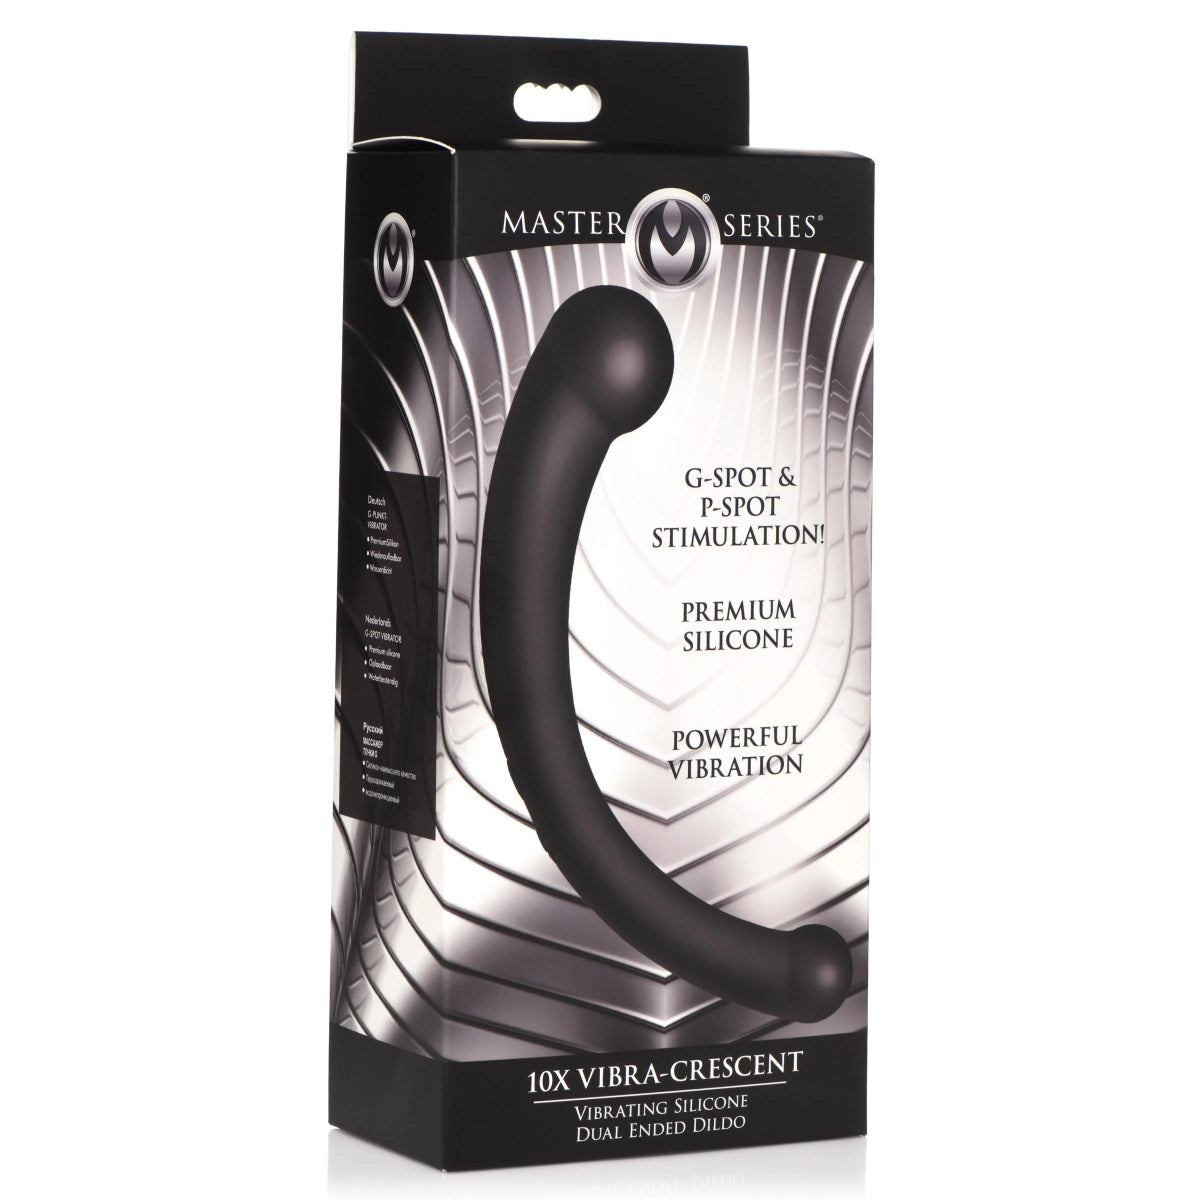 Master Series 10X Vibra Crescent Silicone Dual Ended Vibrating Dildo Black 8 Inch - Simply Pleasure